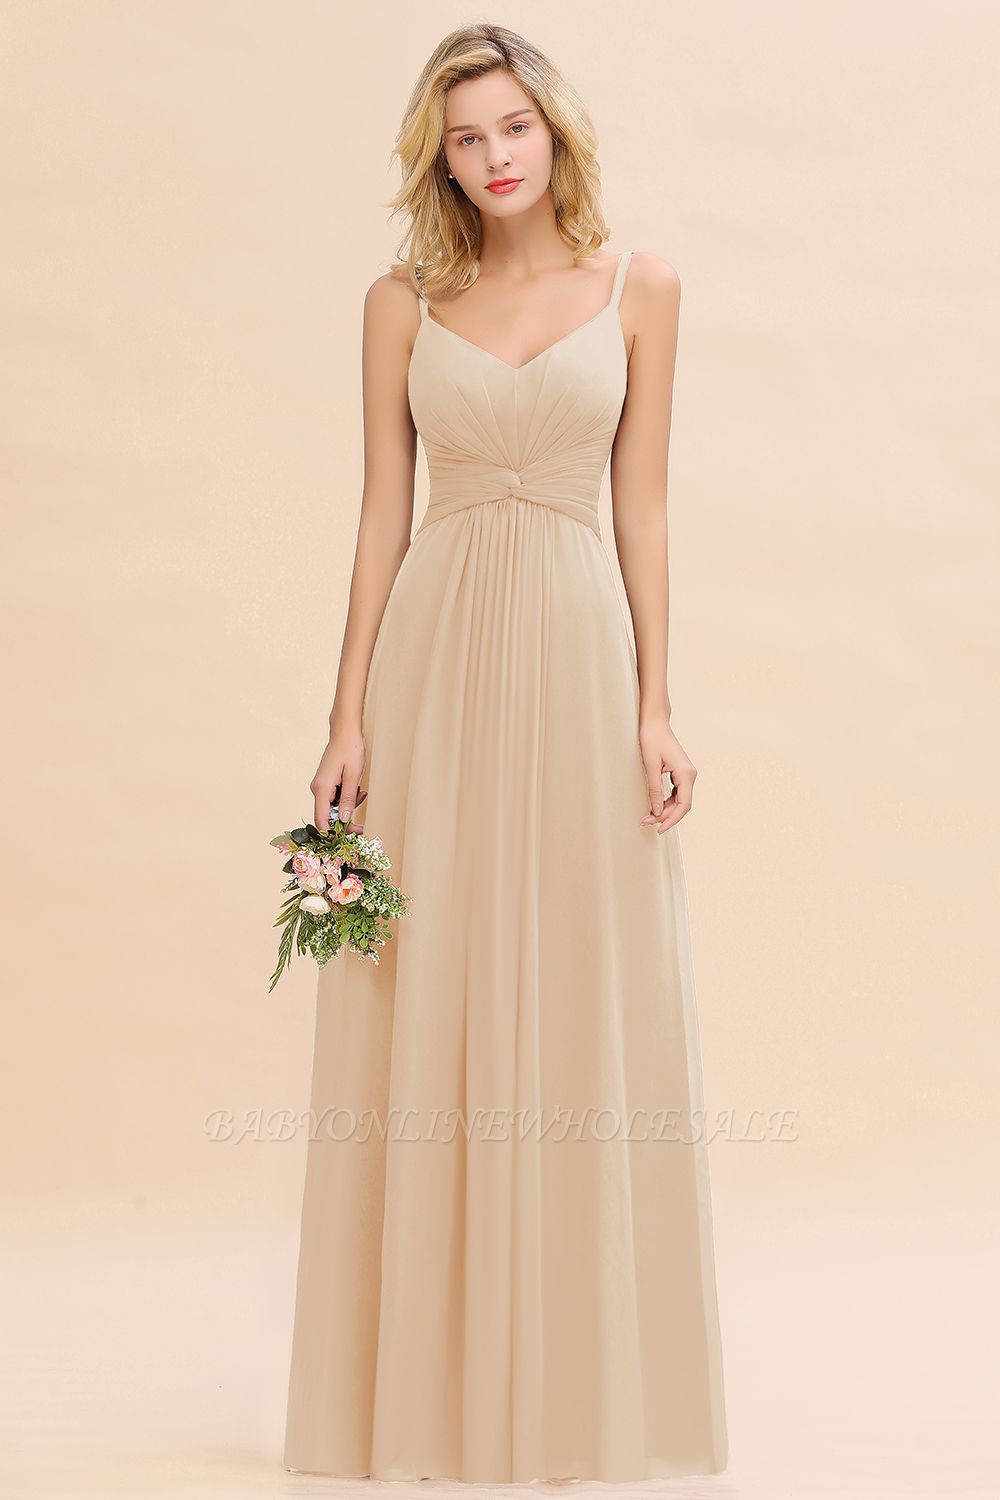 Elegant Ruffles Spaghetti Straps Simple Prom Dresses | A-Line Sleeveless Backless Evening Dresses